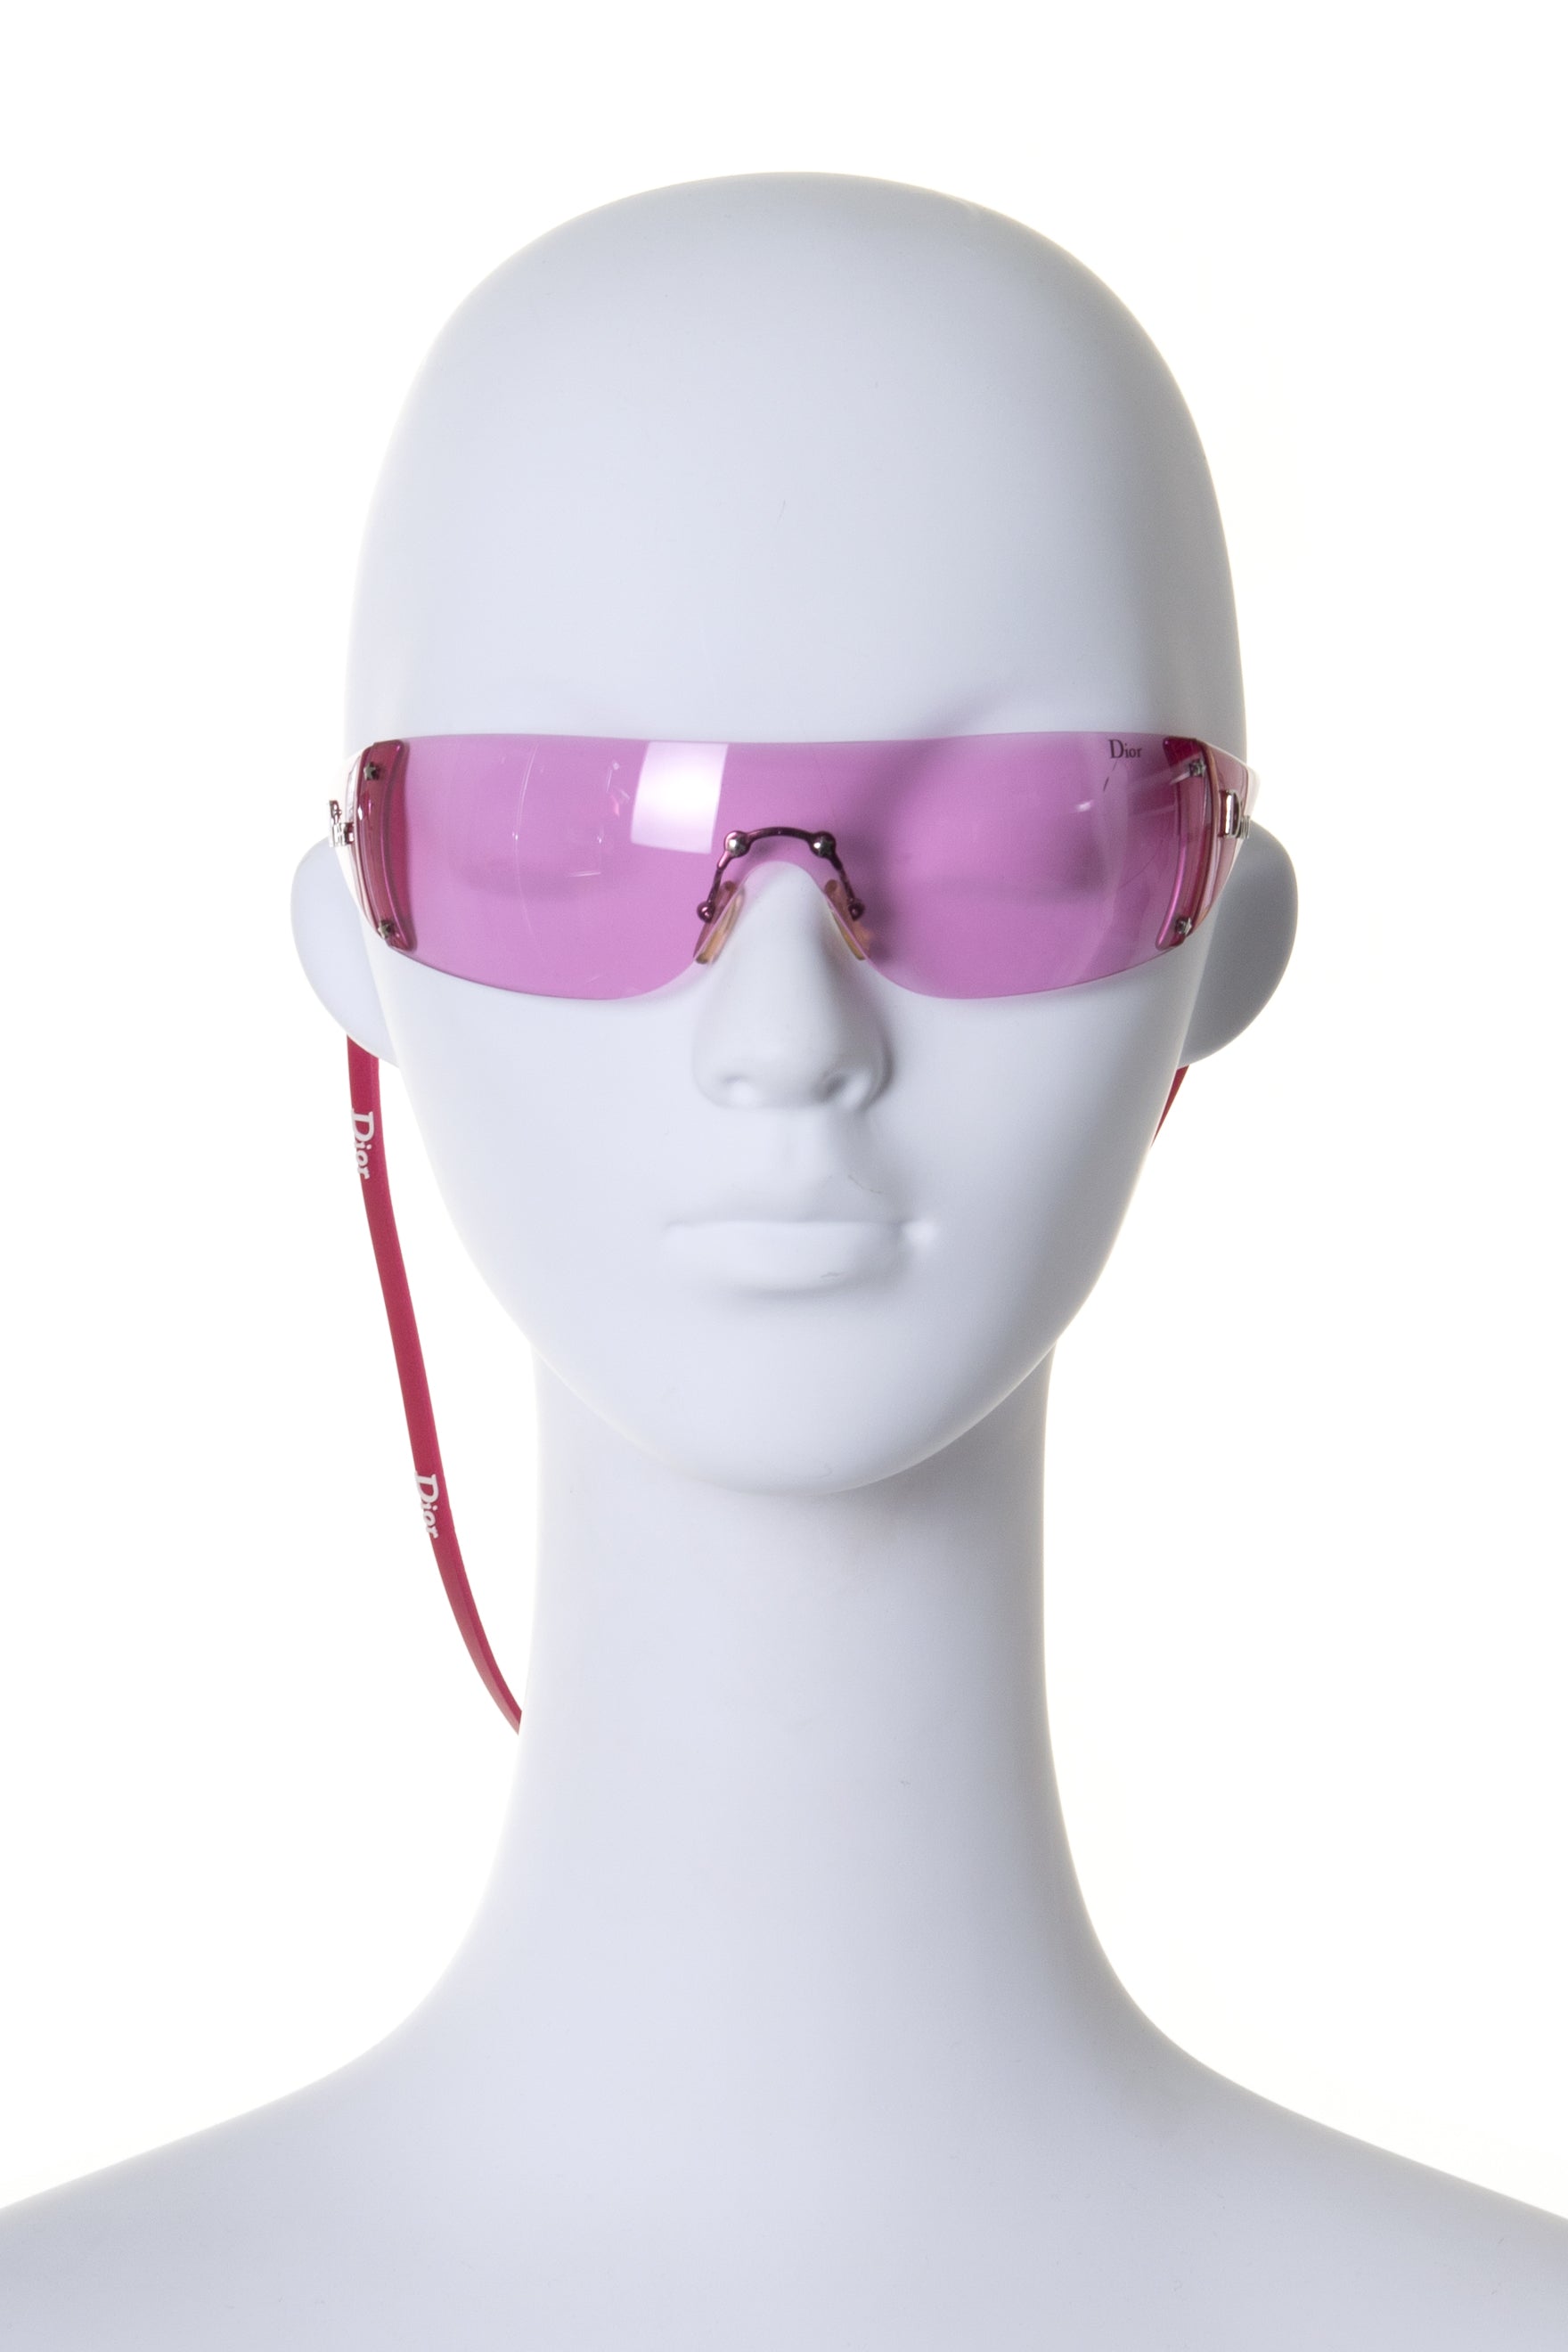 Christian Dior Vintage Interchangeable Ski Goggles Sunglasses